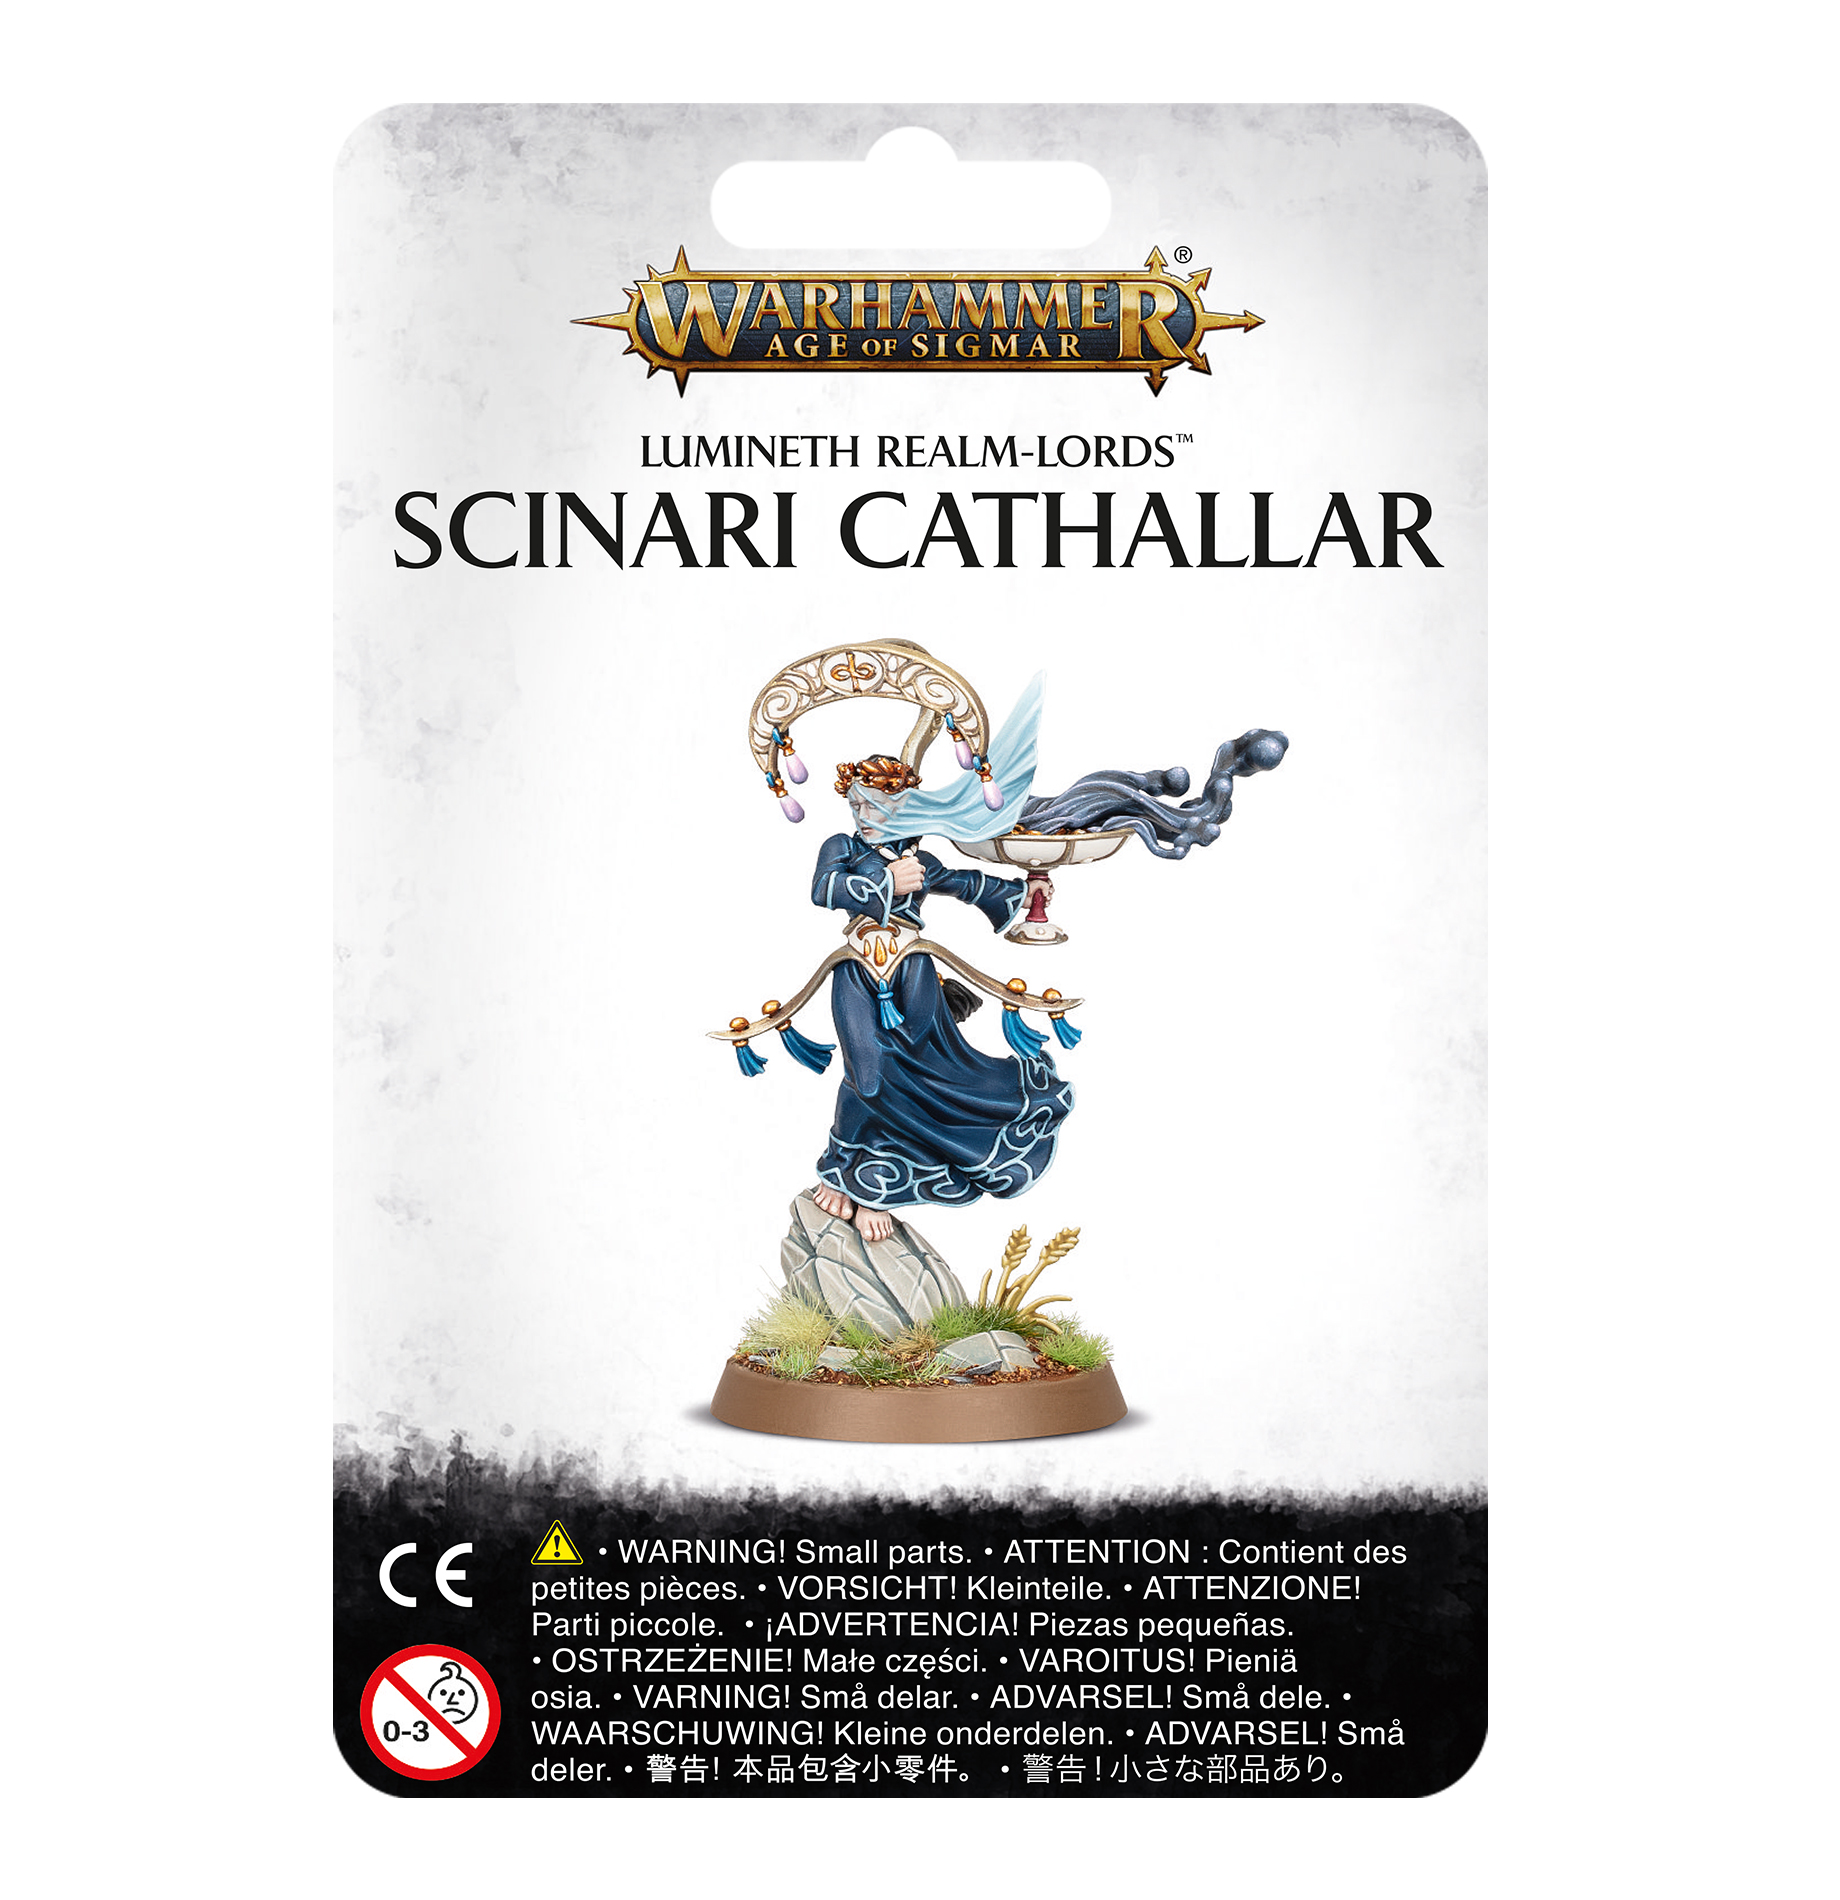 Scinari Cathallar - 87-10 - Lumineth Realm-Lords - Warhammer Age of Sigmar